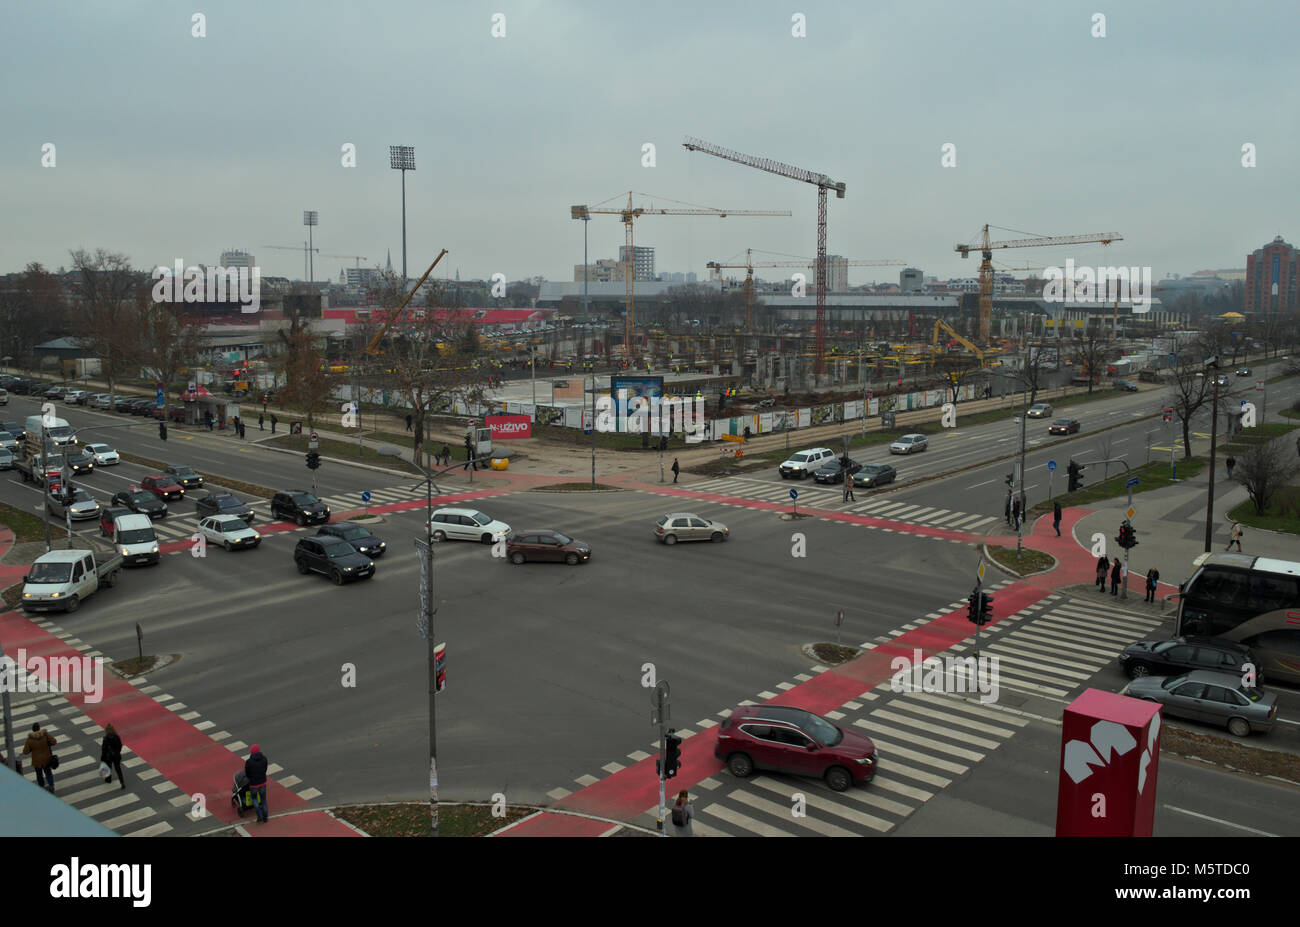 Crossroad and construction of new mall in Novi Sad, Serbia Stock Photo